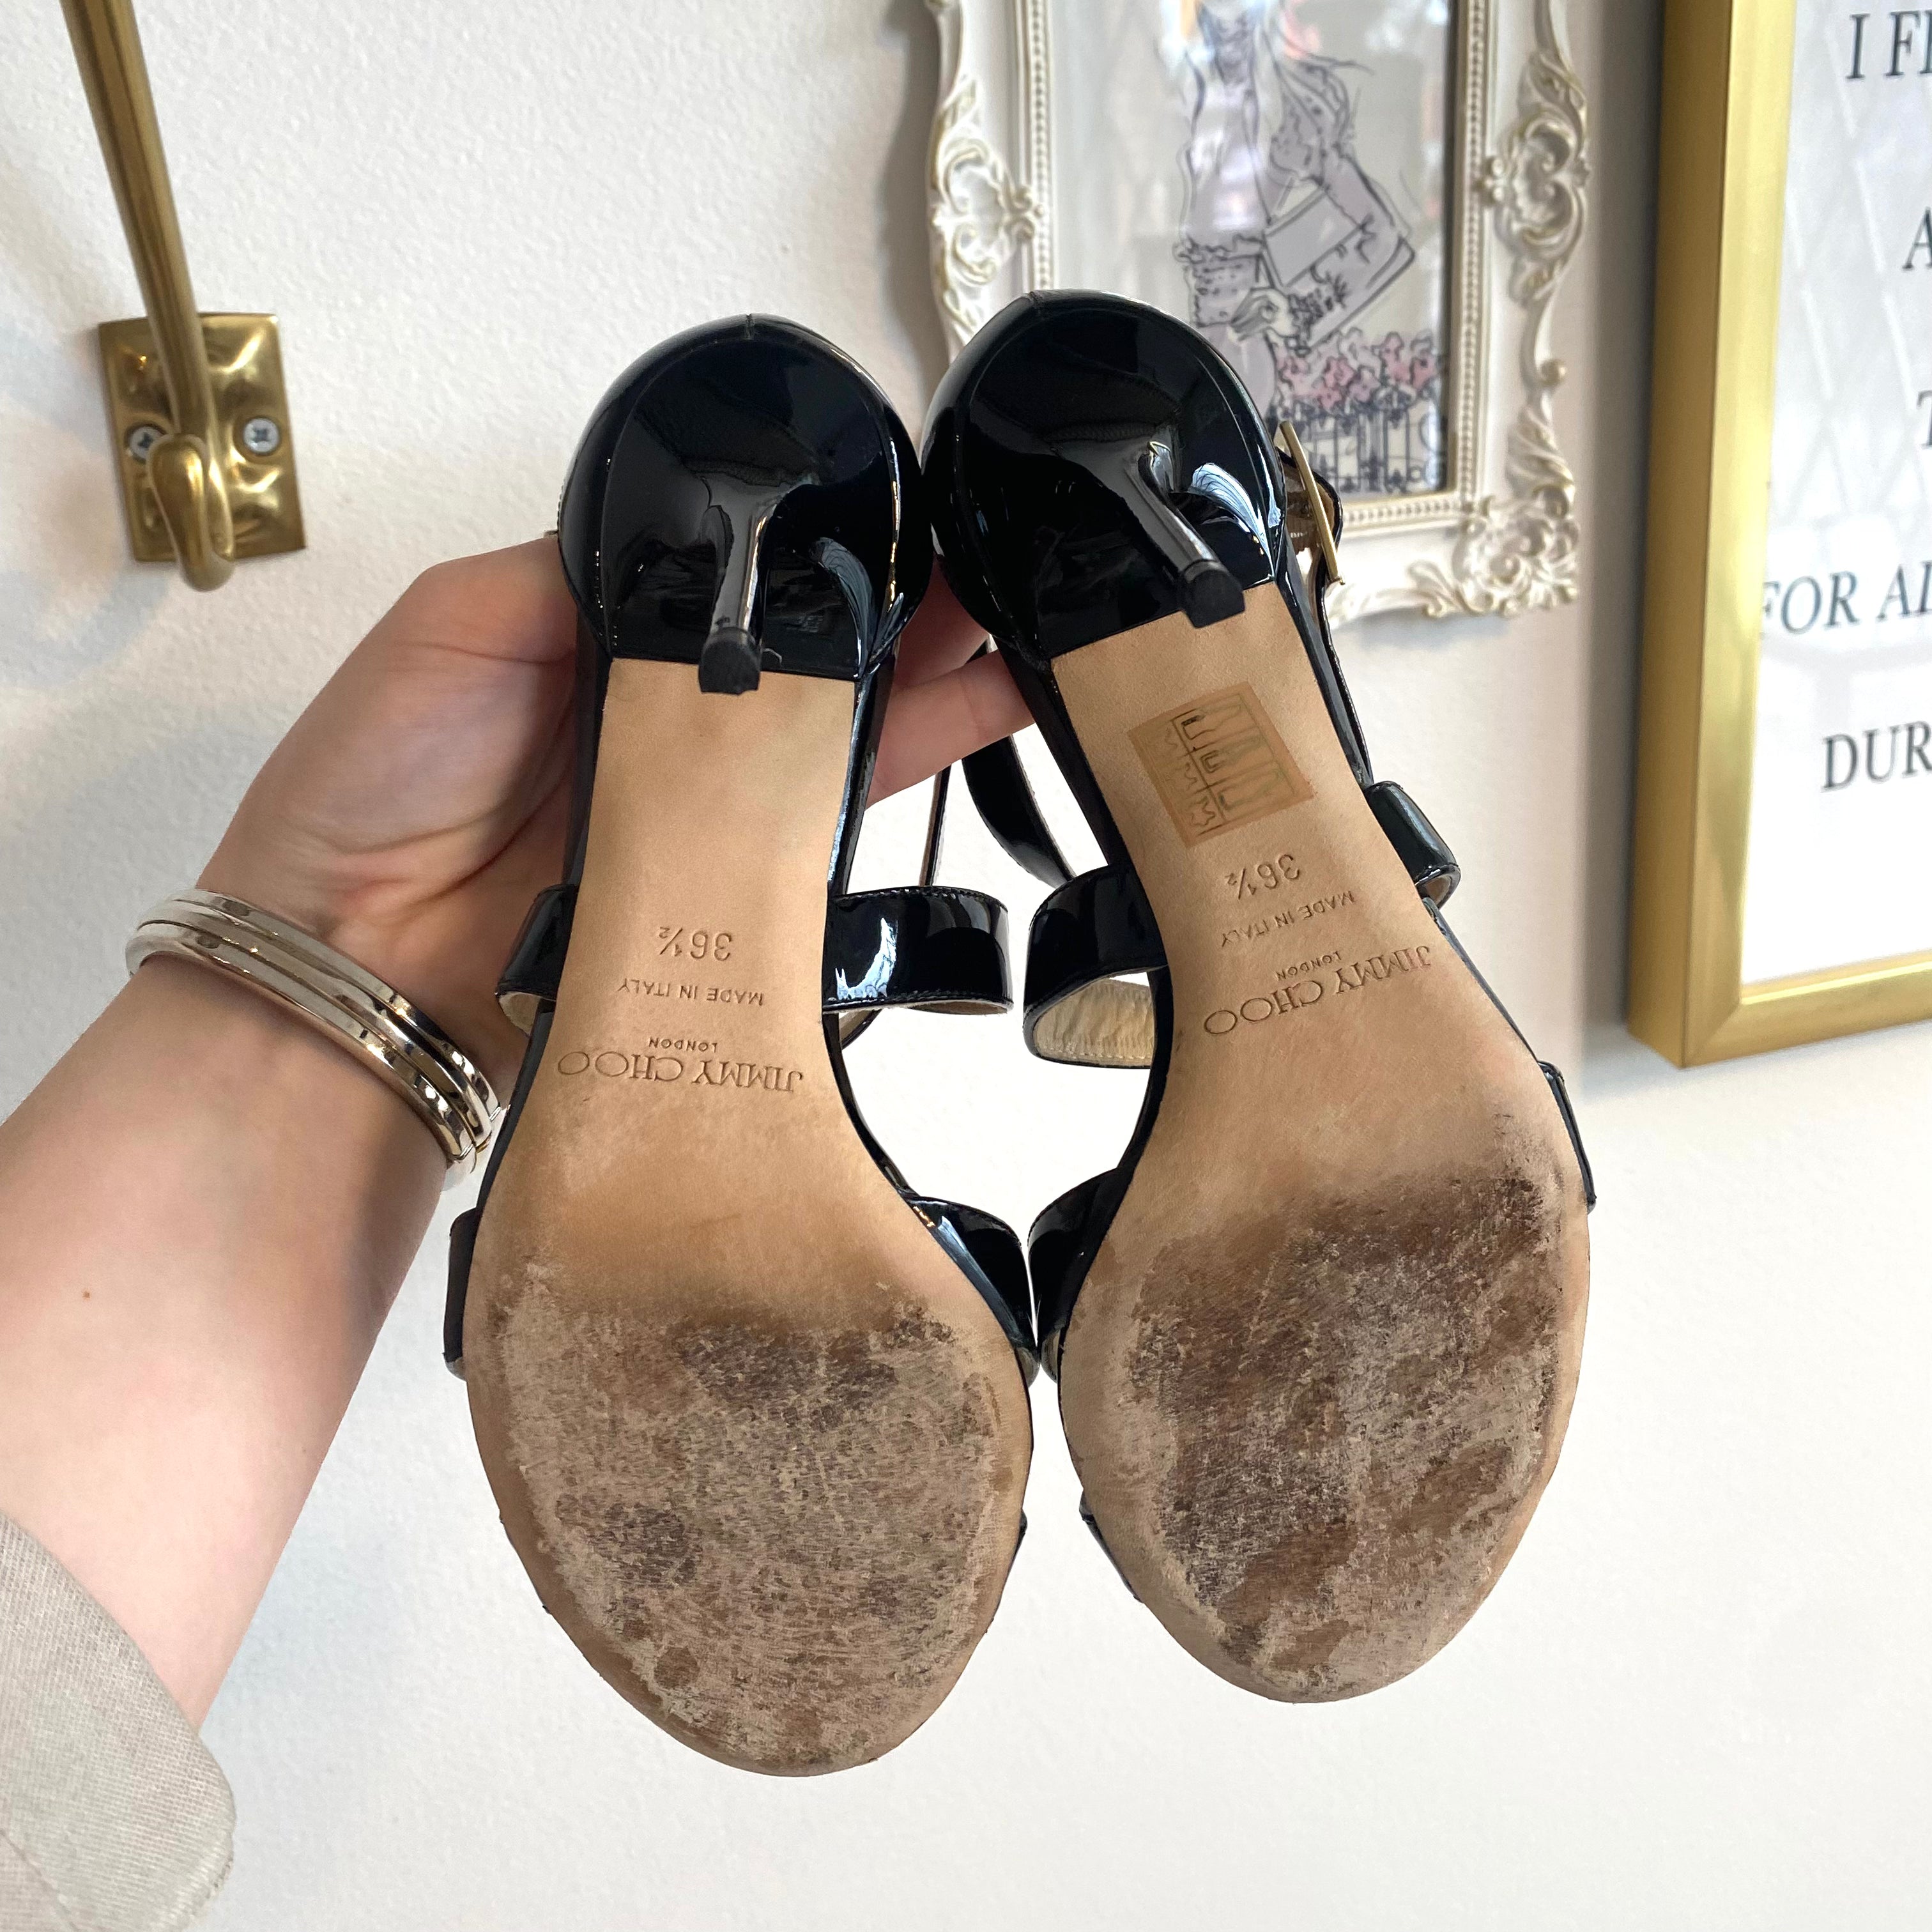 Pre-Owned JIMMY CHOO Lottie Black Patent Leather Sandal Size 36.5